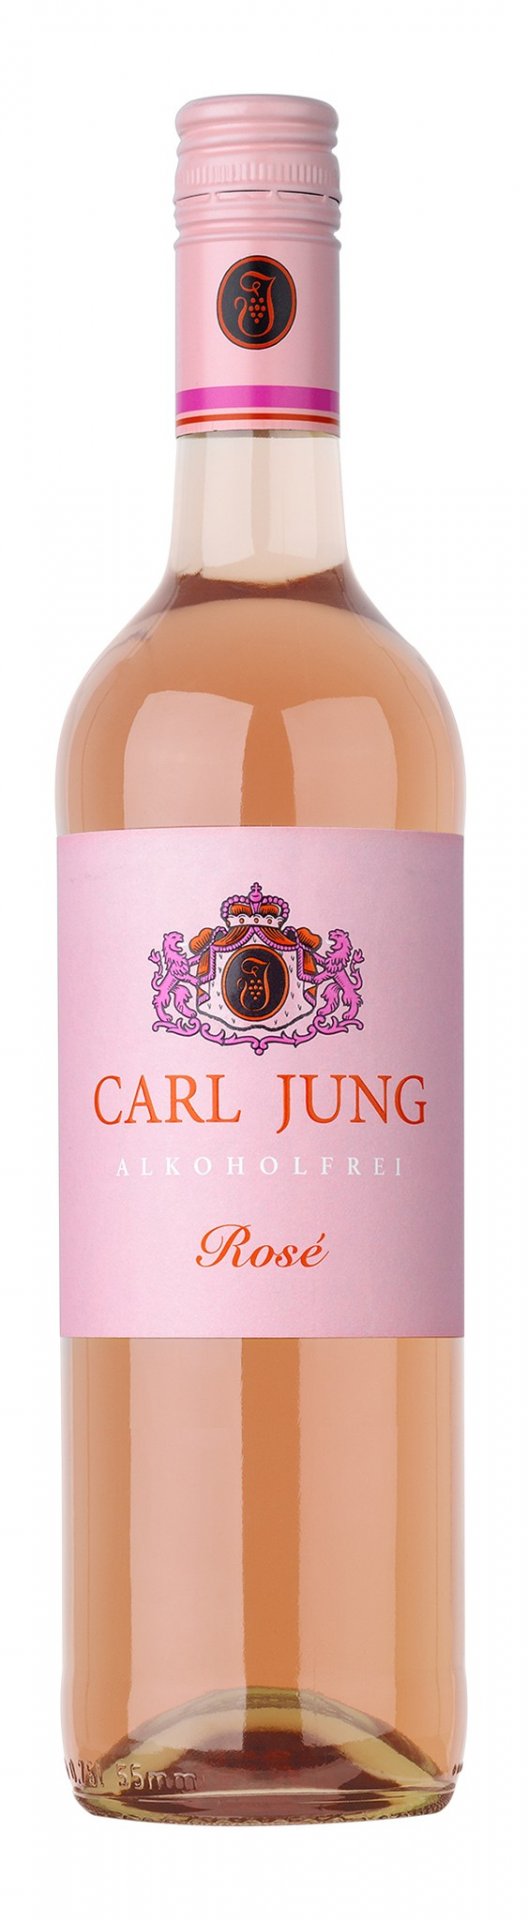 Carl Jung Selection Rosé Alcohol-free